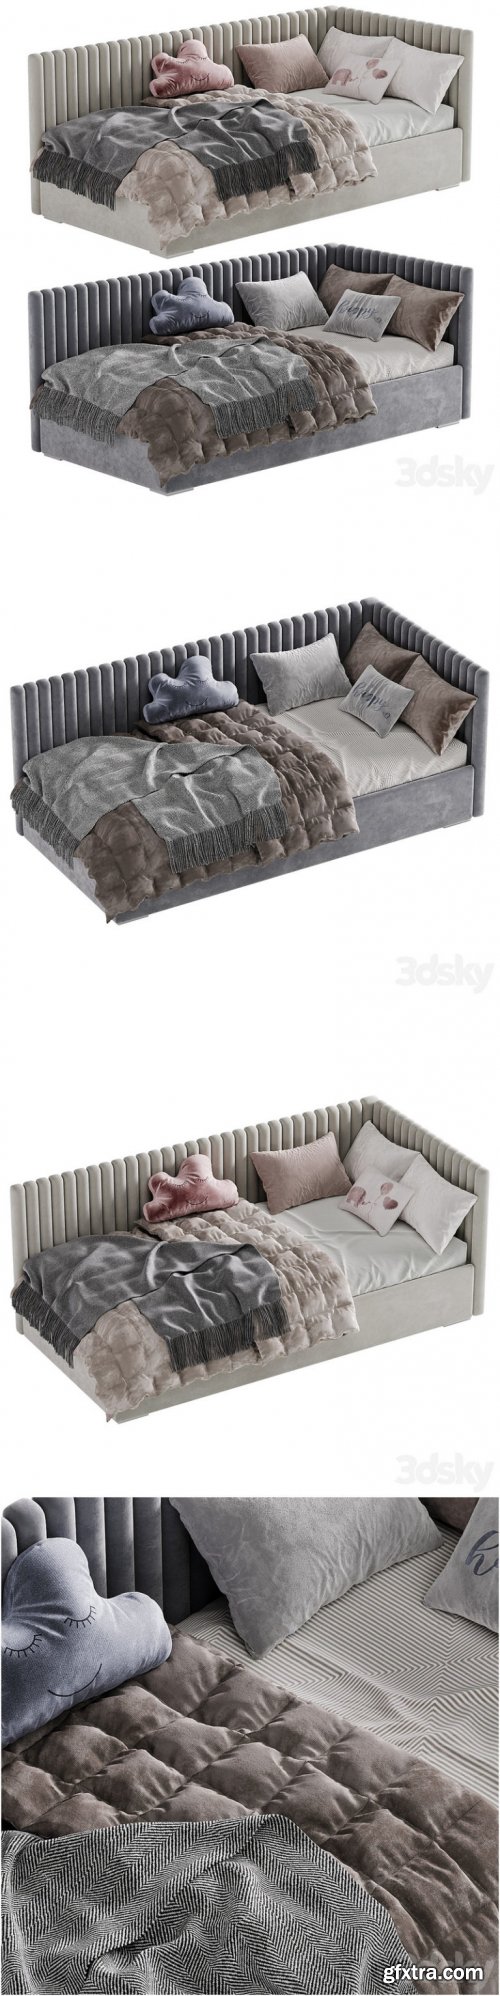 Children’s bed in modern style 2